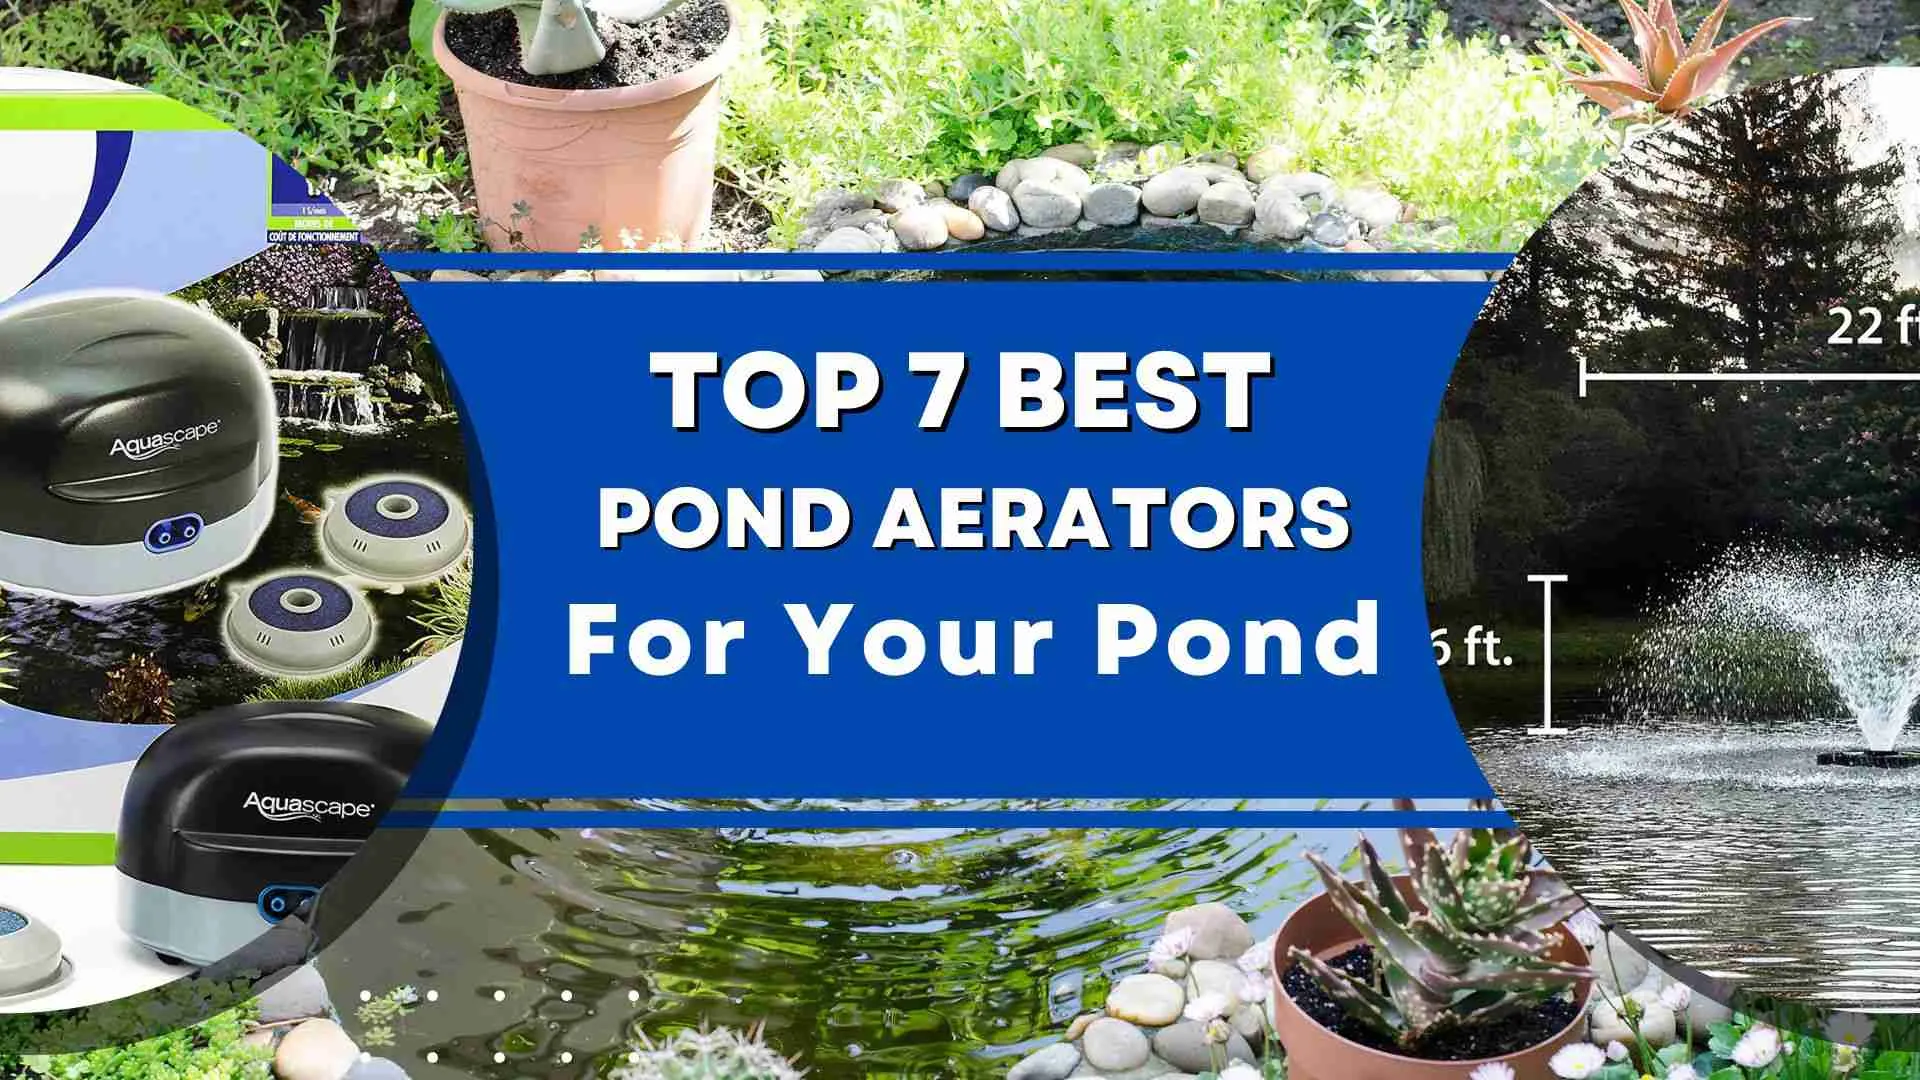 Top 7 Best Pond Aerators